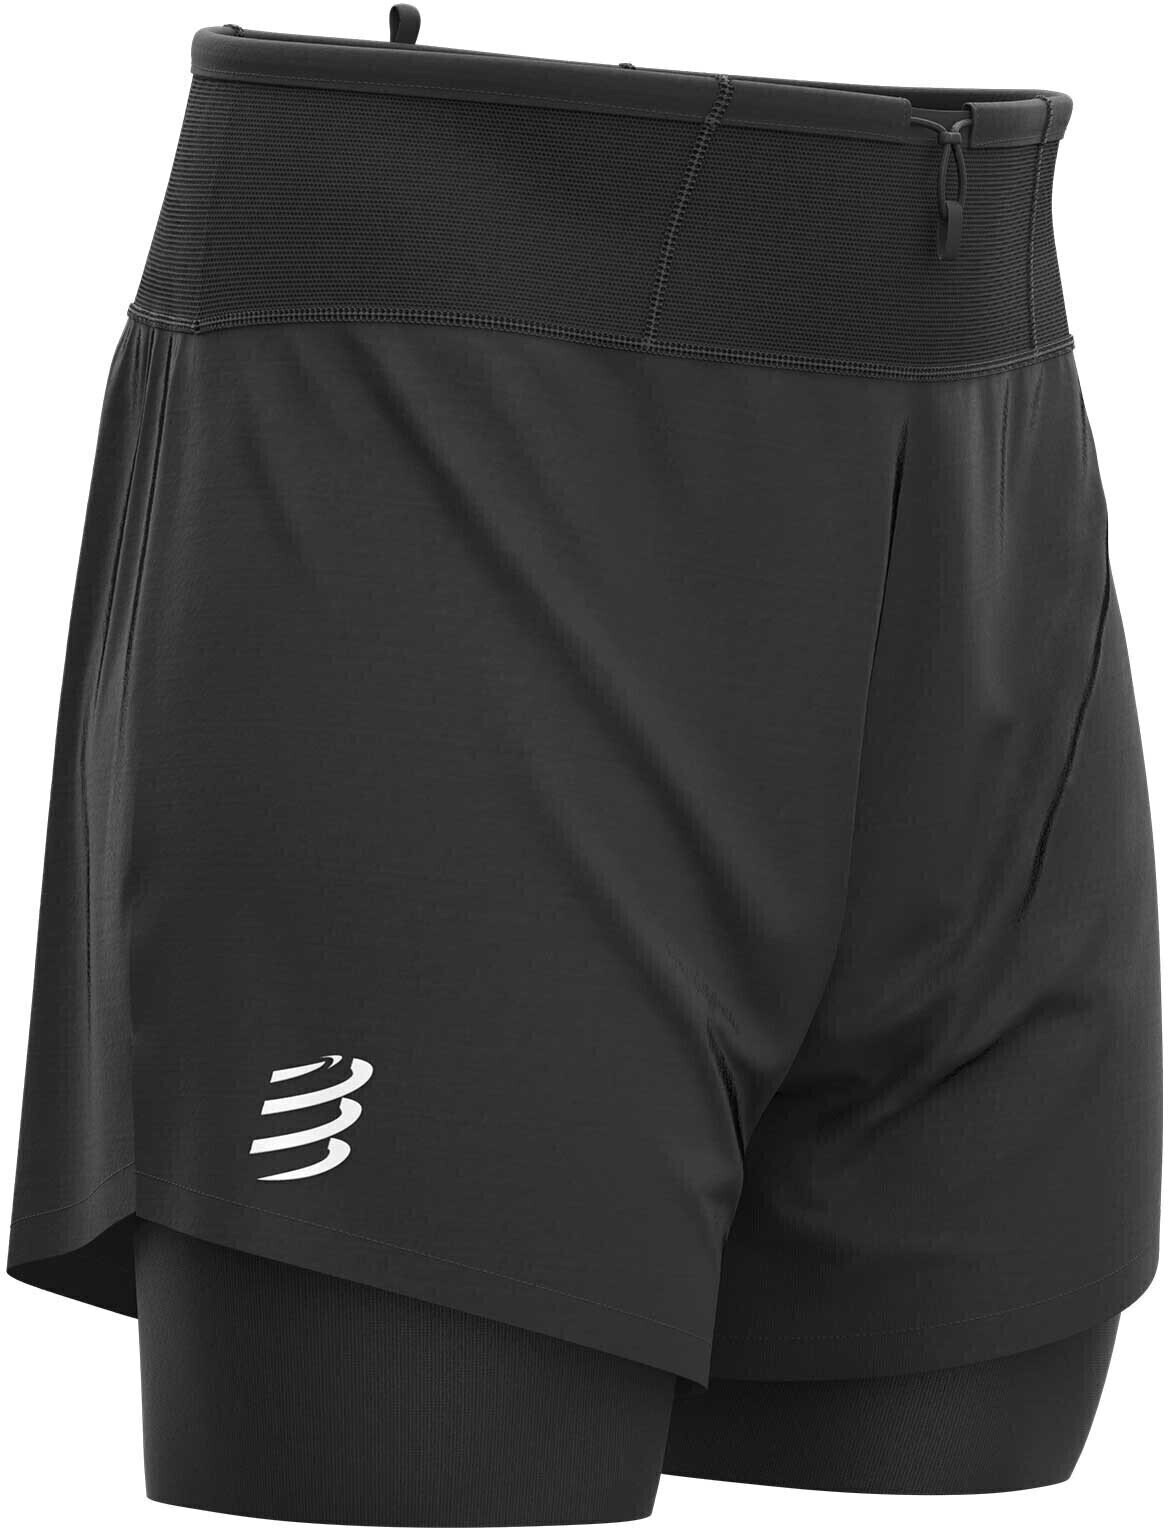 Running shorts Compressport Trail 2-in-1 Short Black S Running shorts